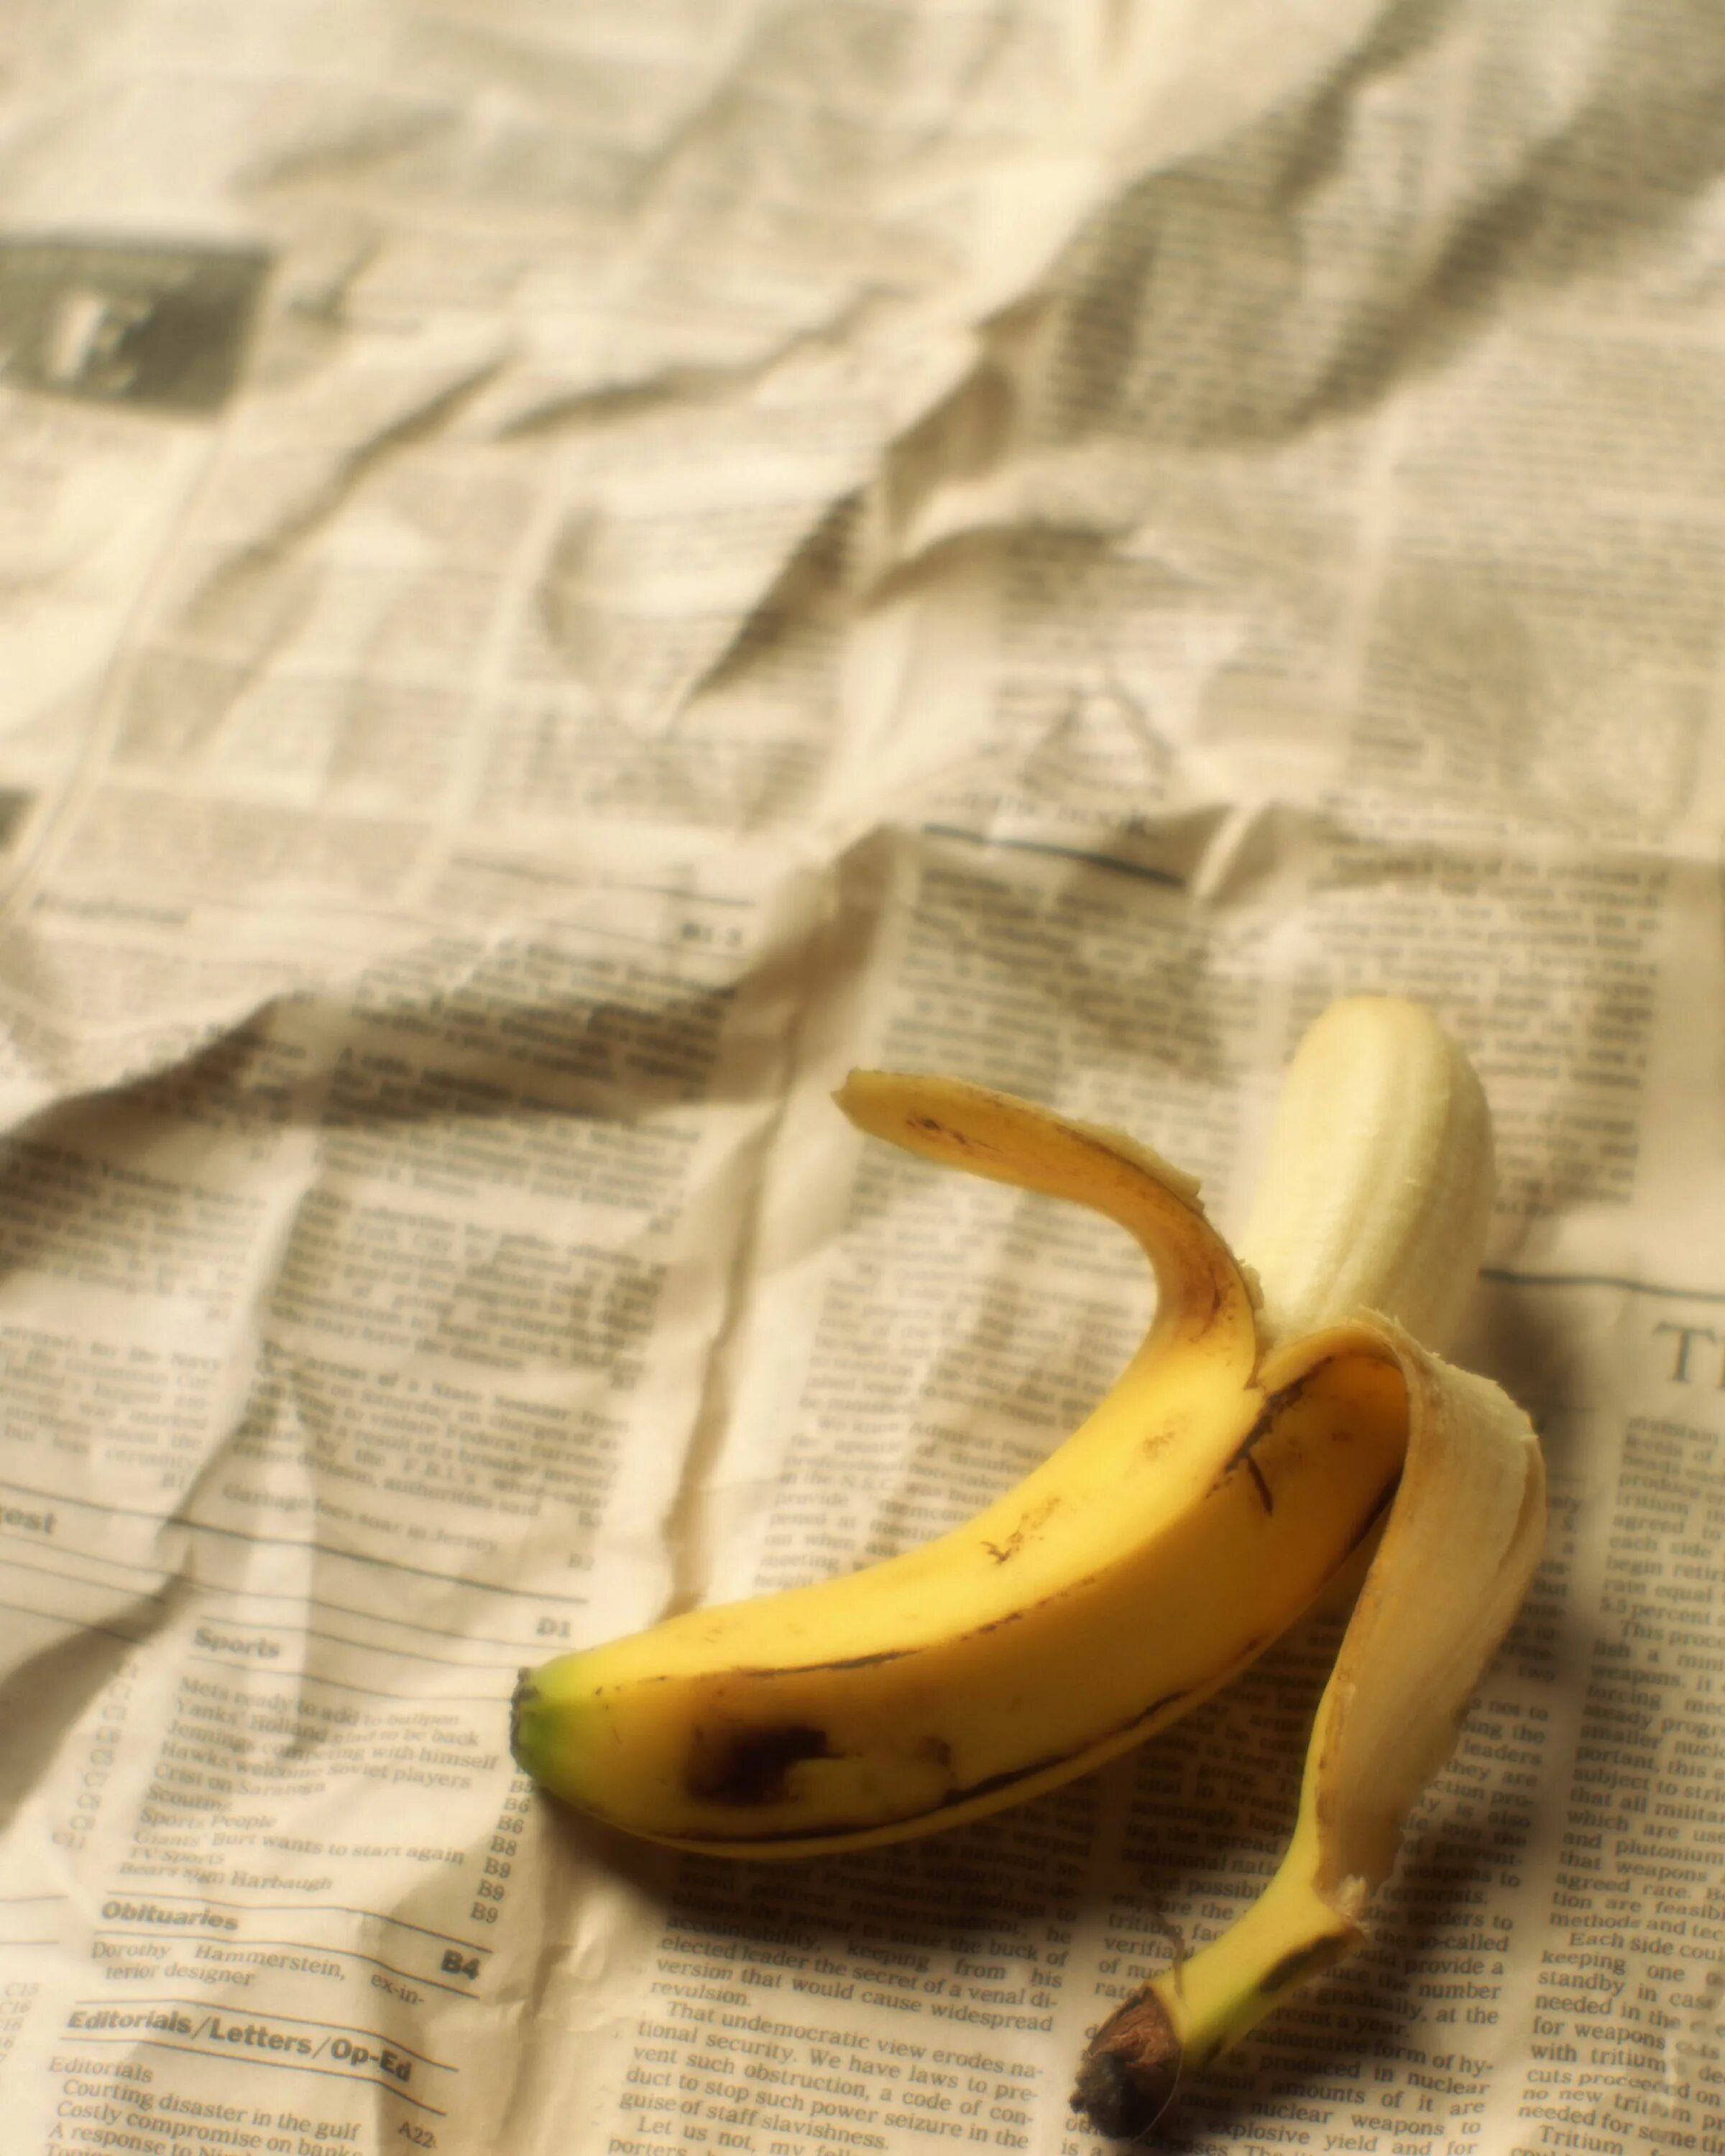 Сколько лежат бананы. Банан лежит. Банан лежит на столе. Бананы валяются. Банан лежа.